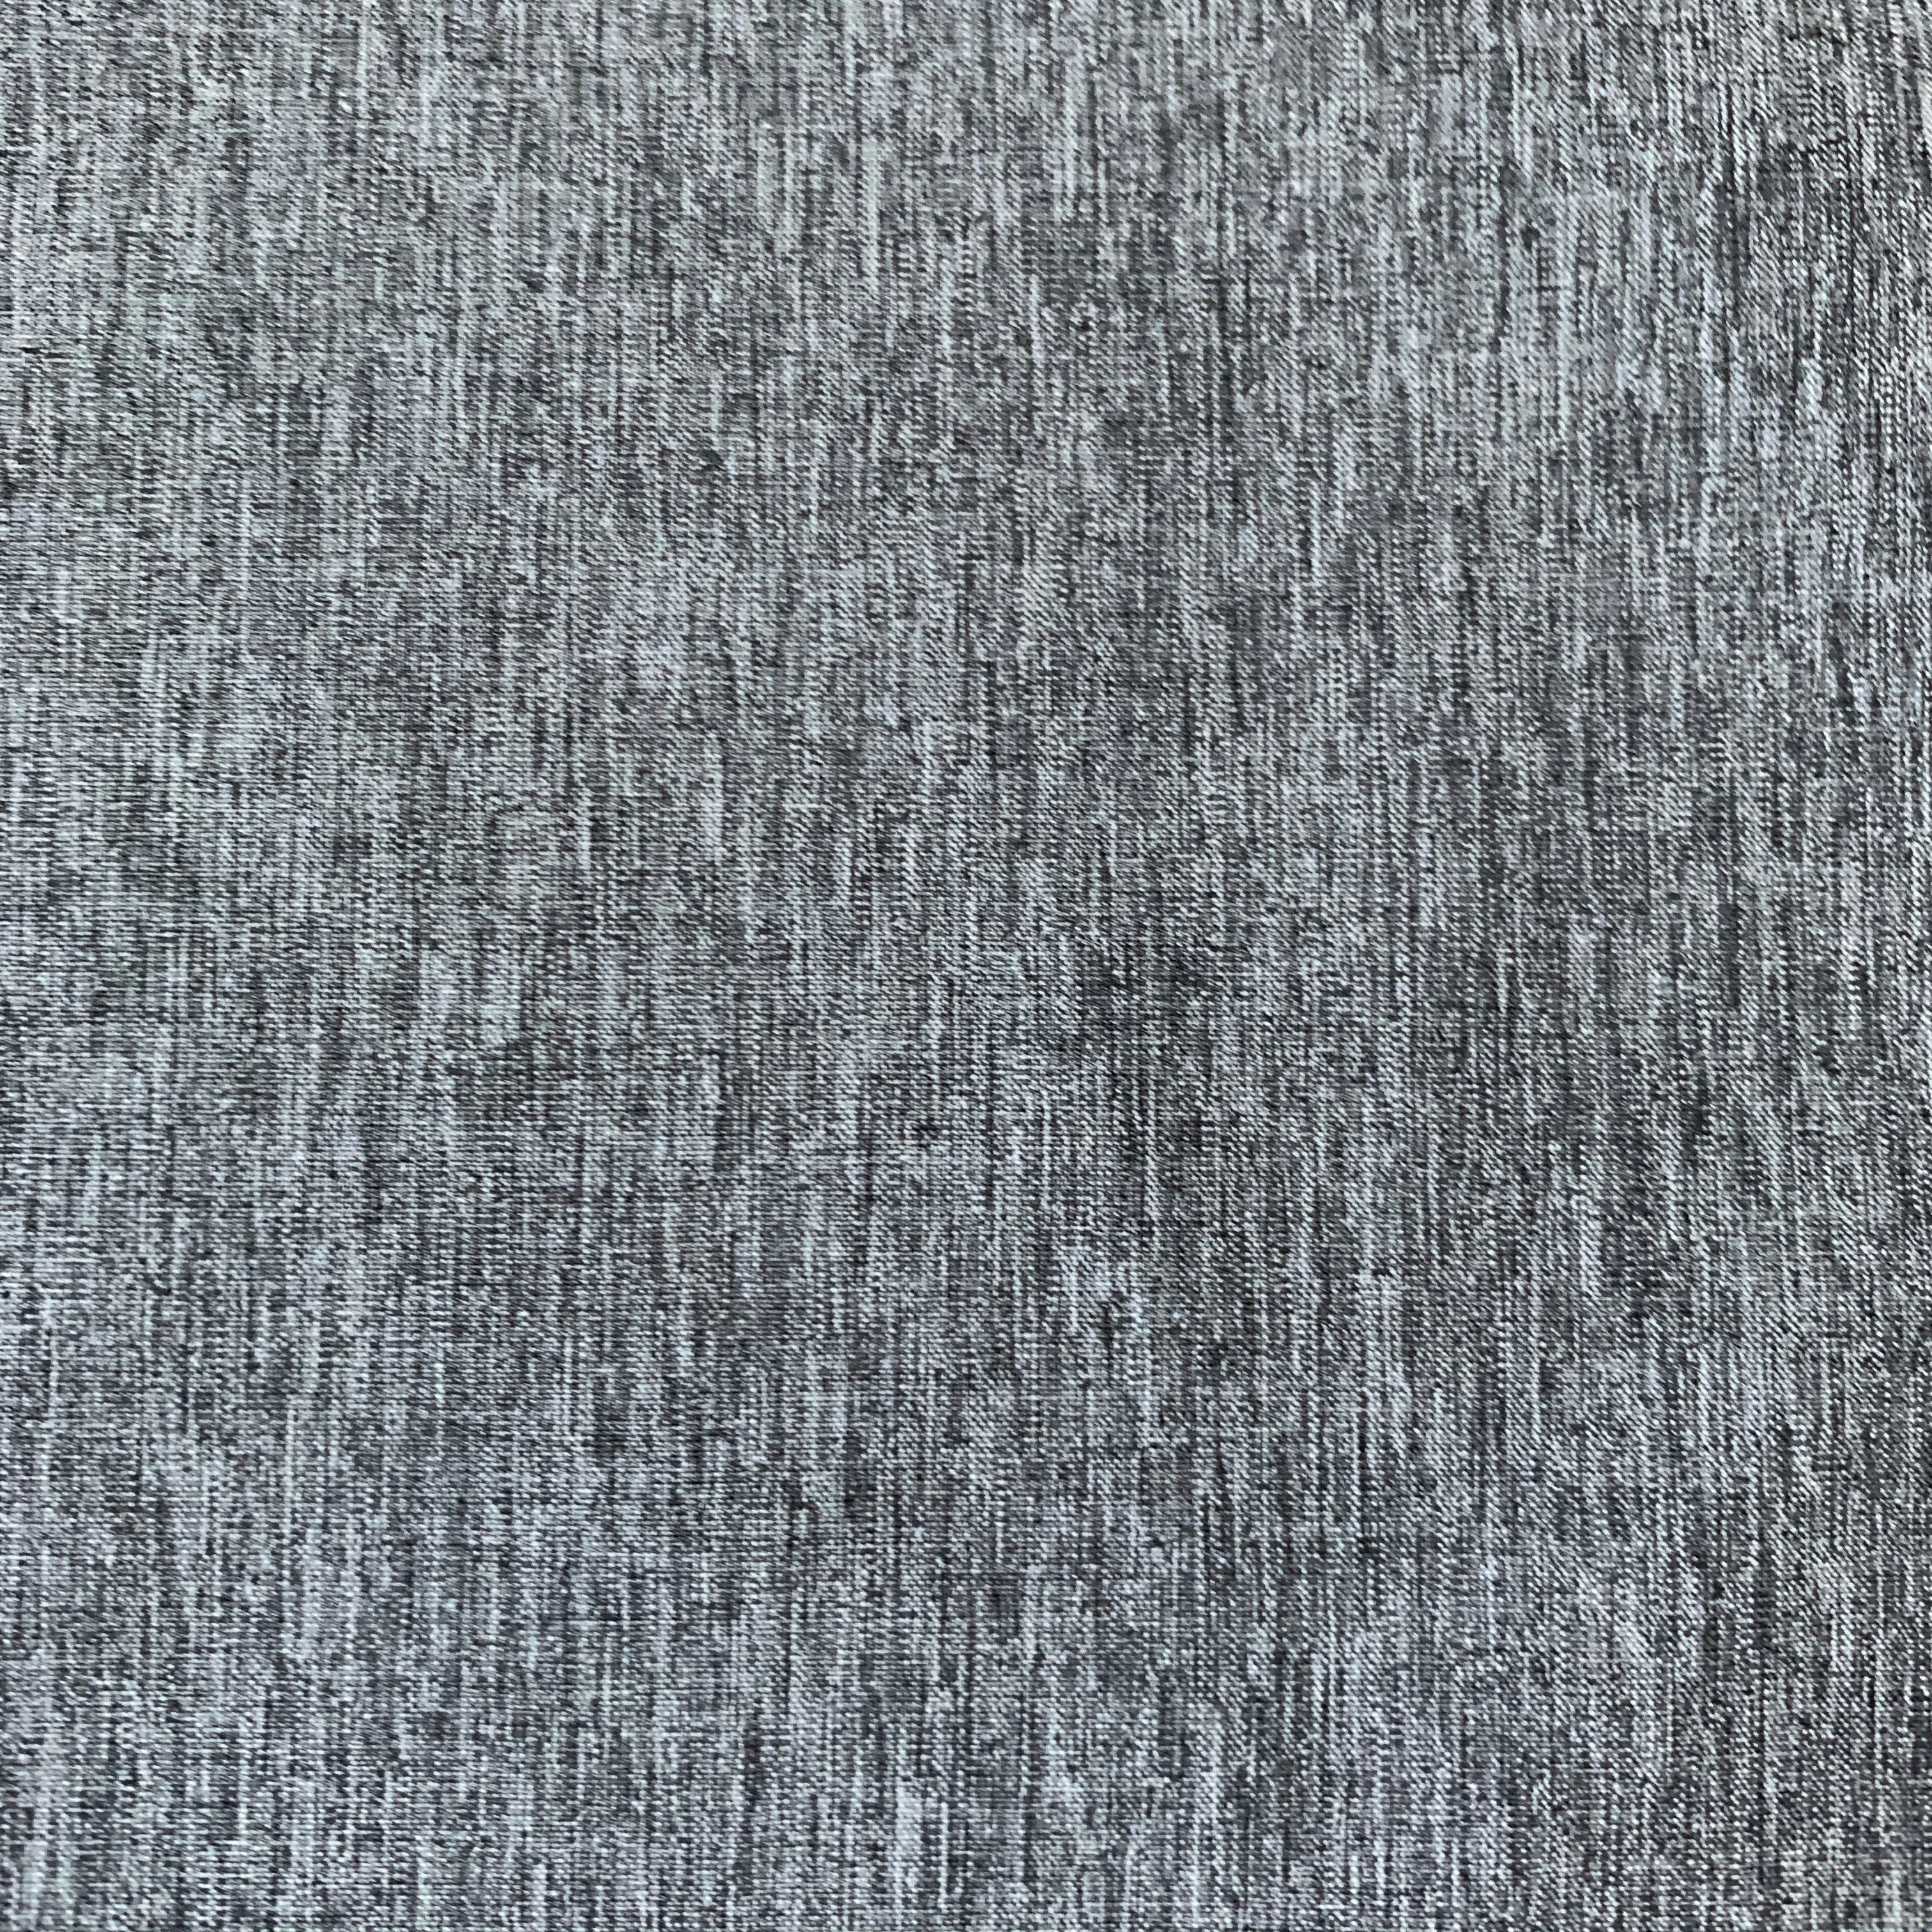 Stretch Woven - Grey Linen Look